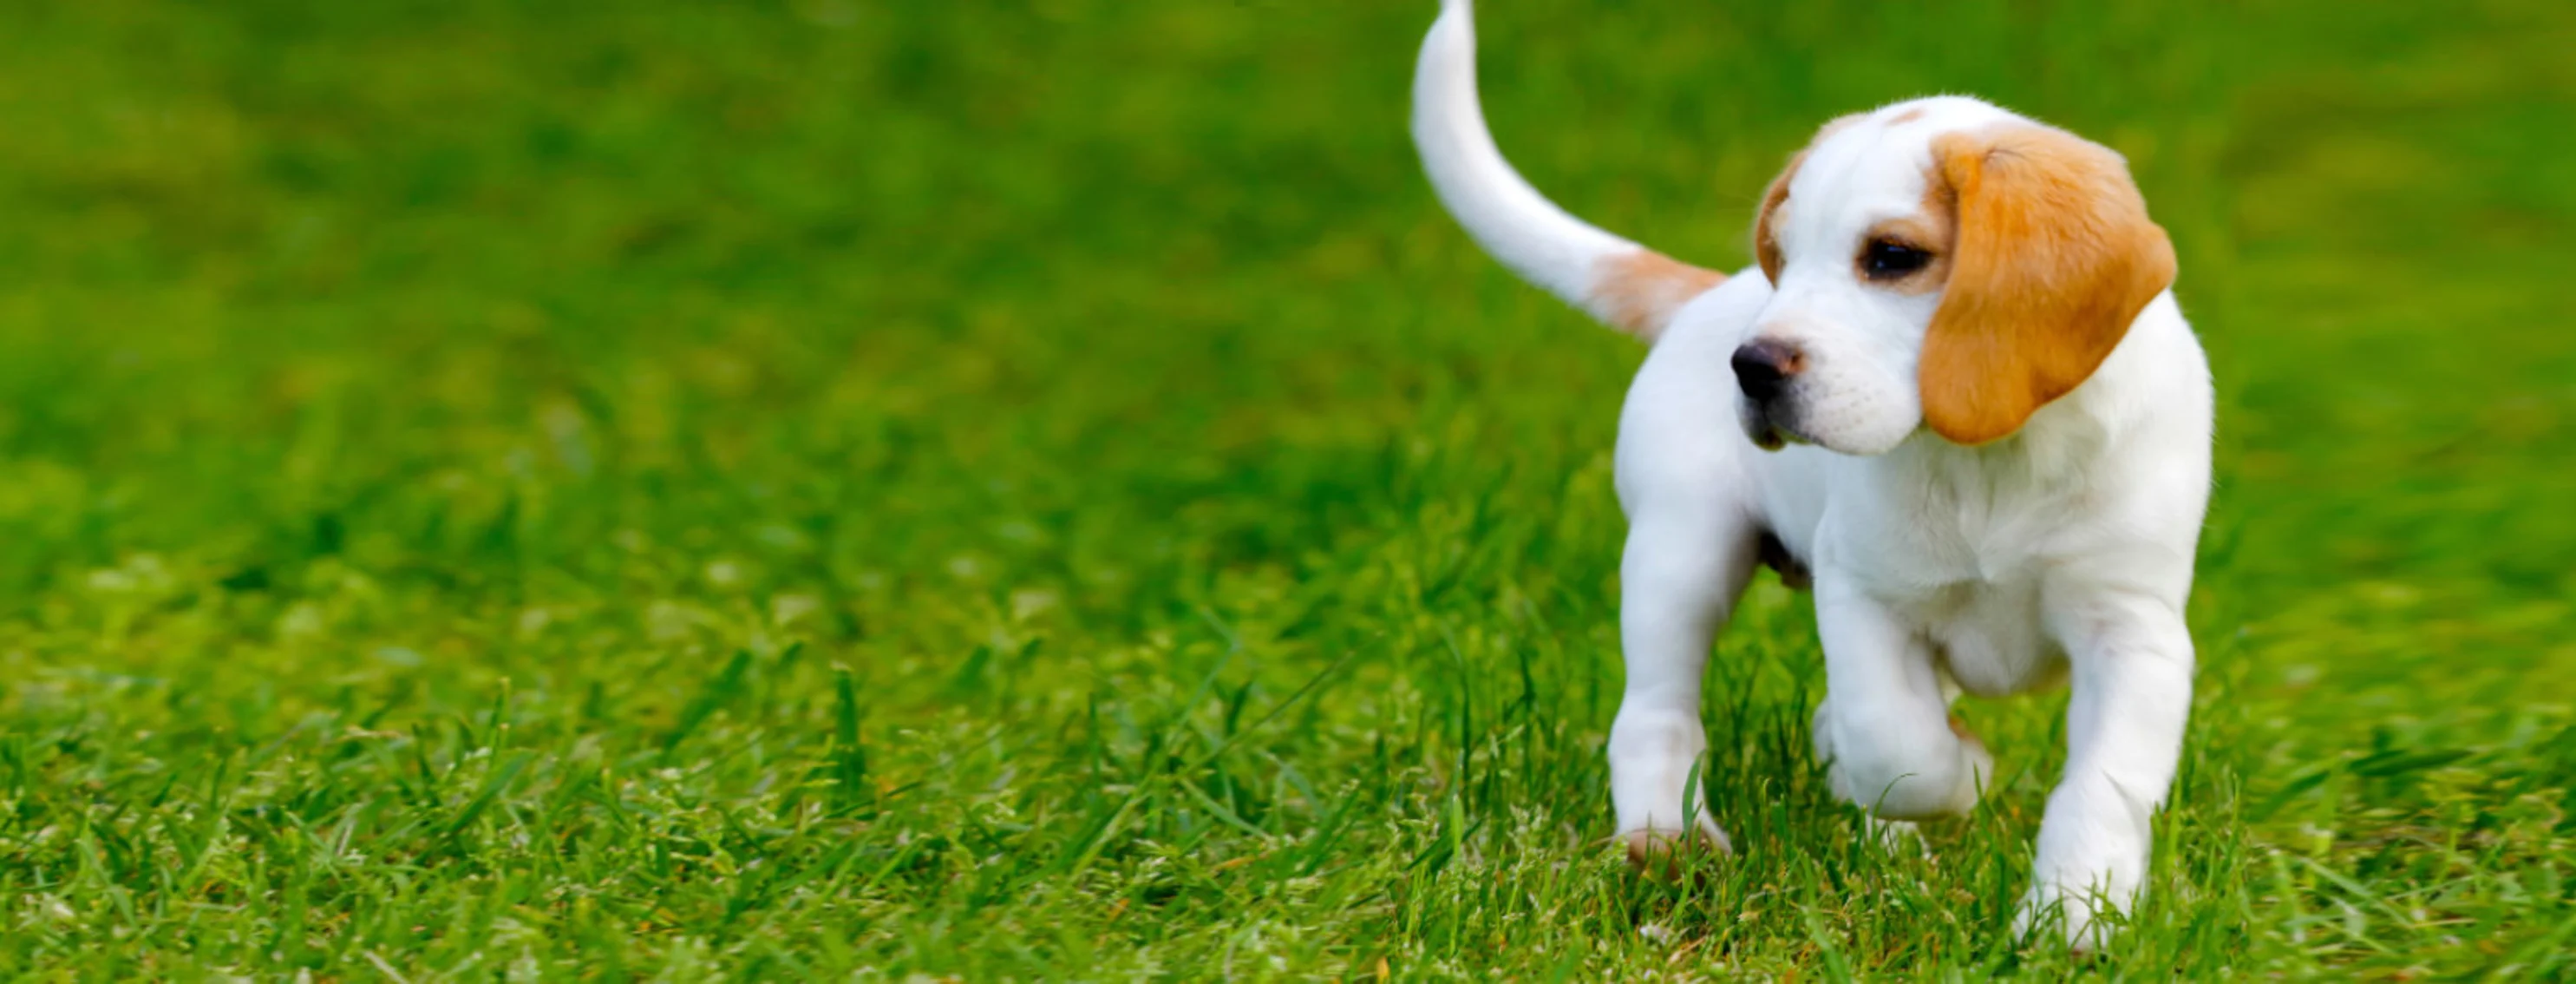 Beagle (Dog) Puppy Walking on Grass